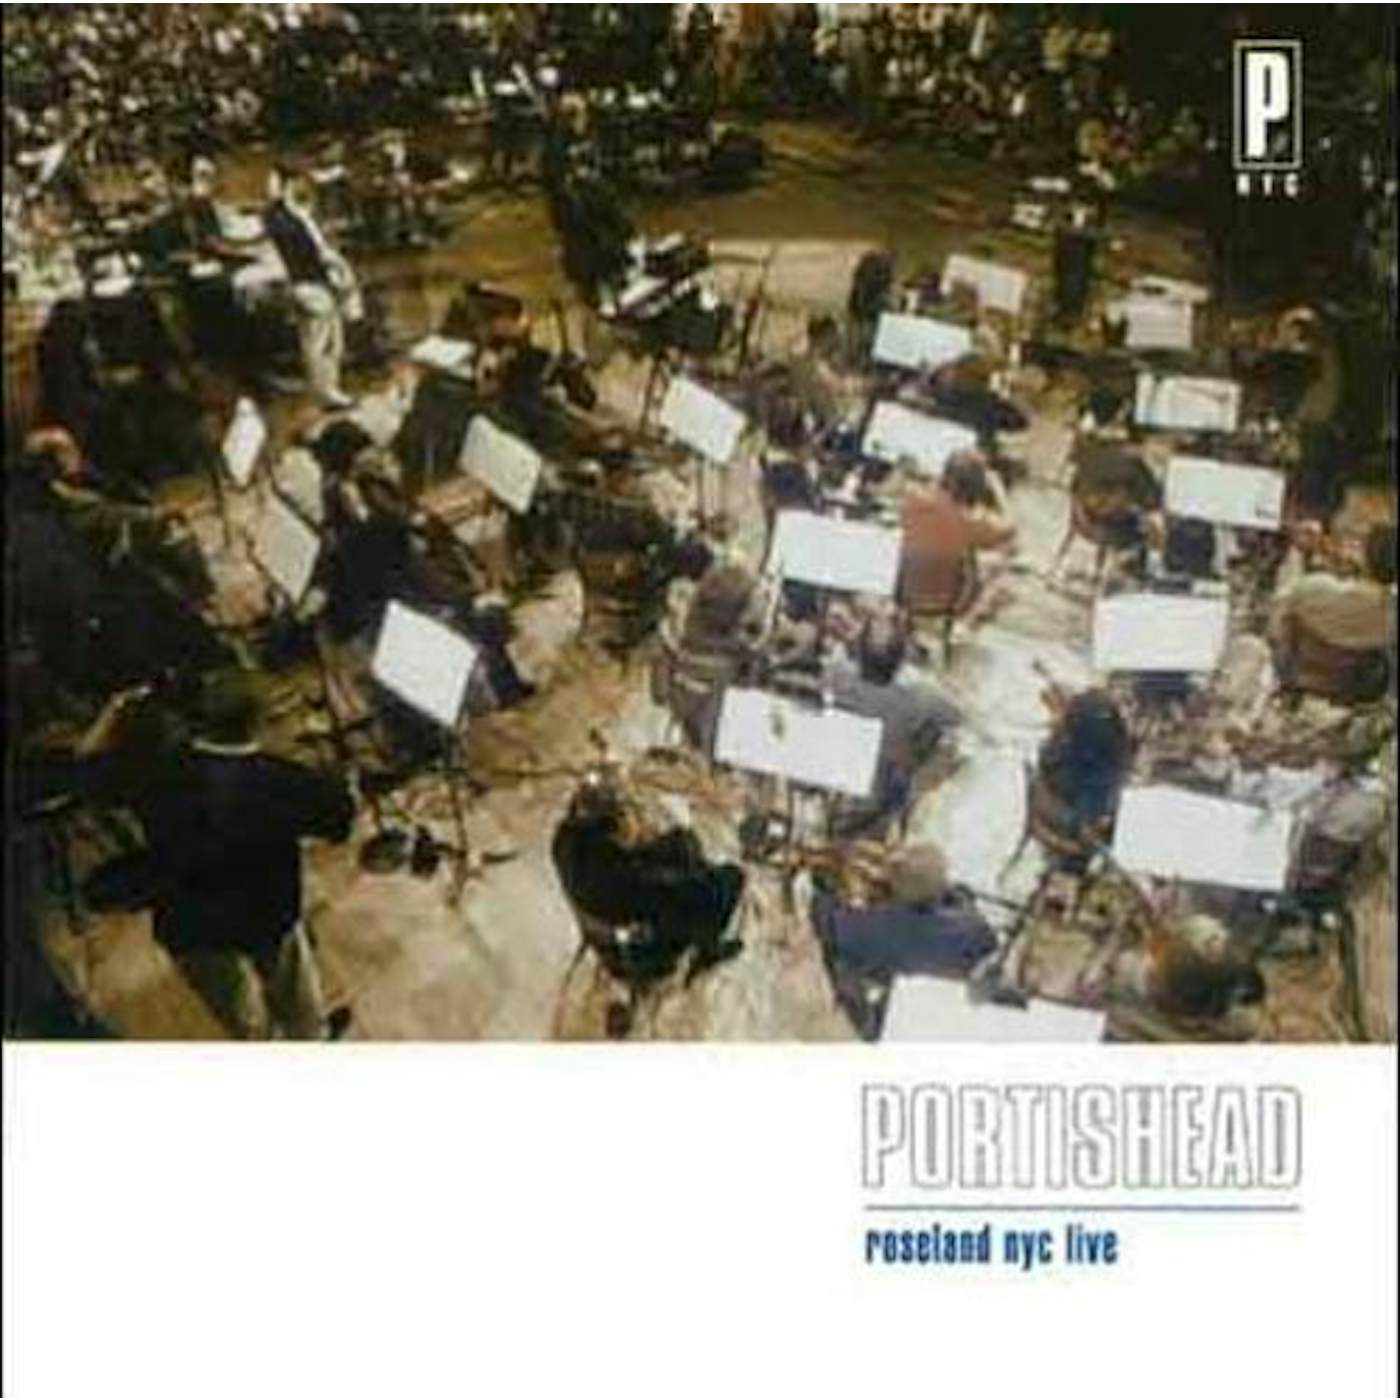 Portishead PNYC LIVE Vinyl Record